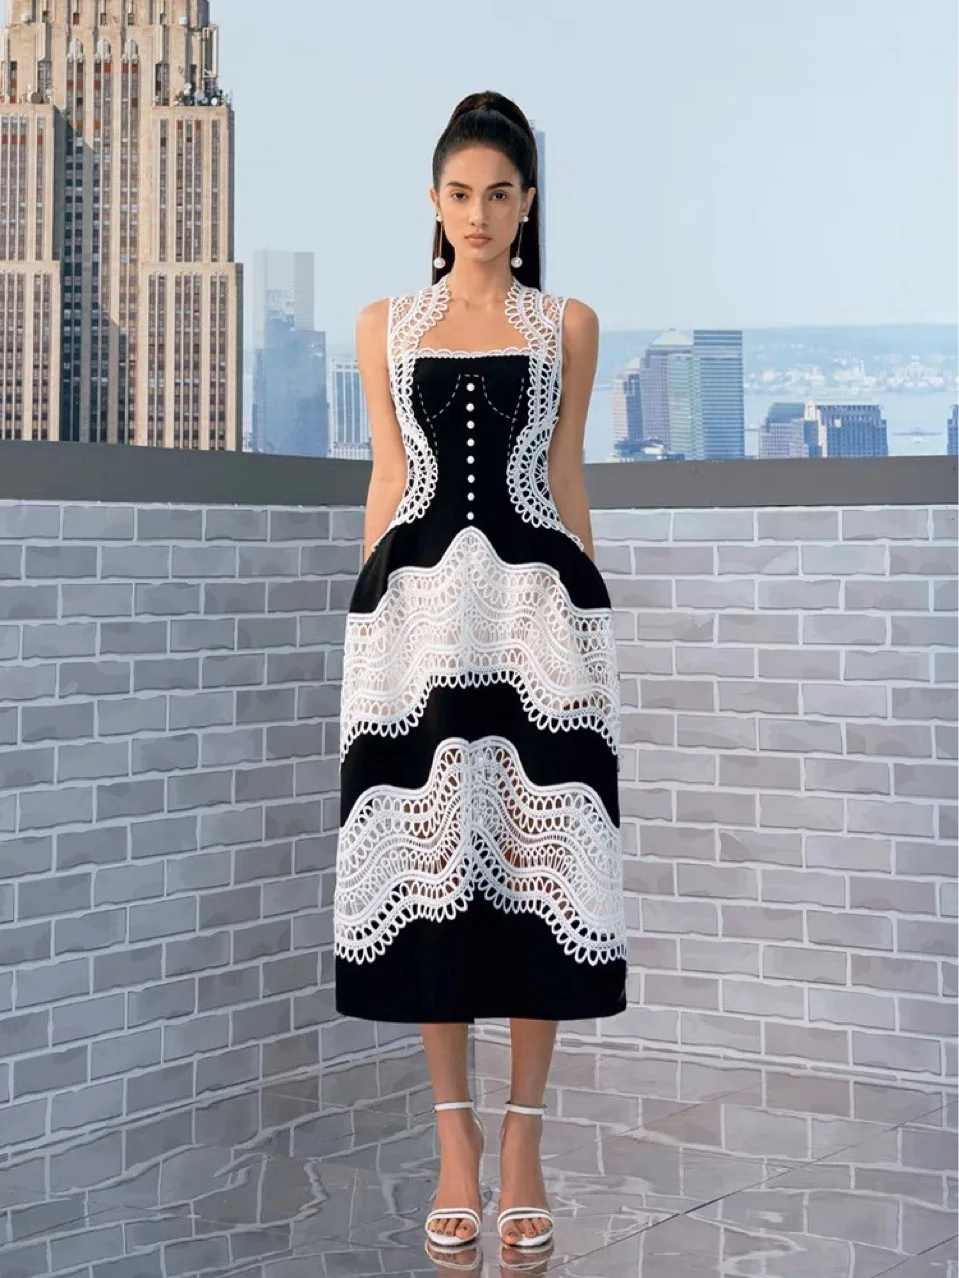 Lace Hight Quality Sweet Sleeveless White Black Patchwork New Women Summer Elegant A-Line Club Party Midi Dress